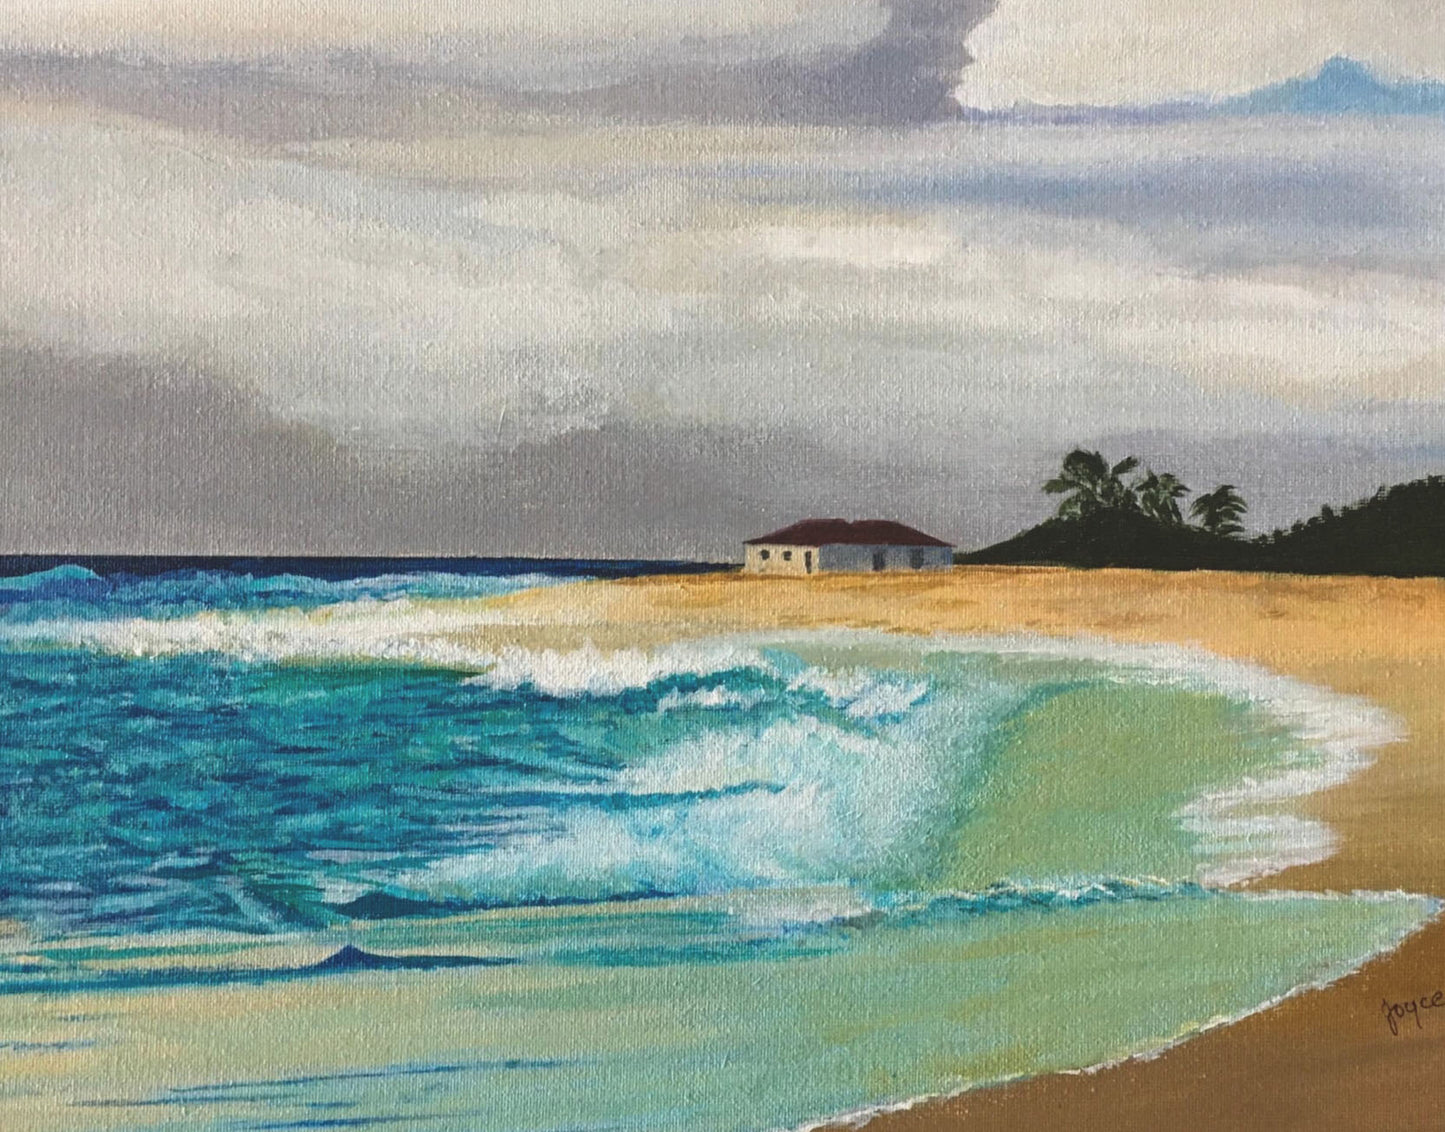 Isolated Beach House.   Painting Print on Canvas.